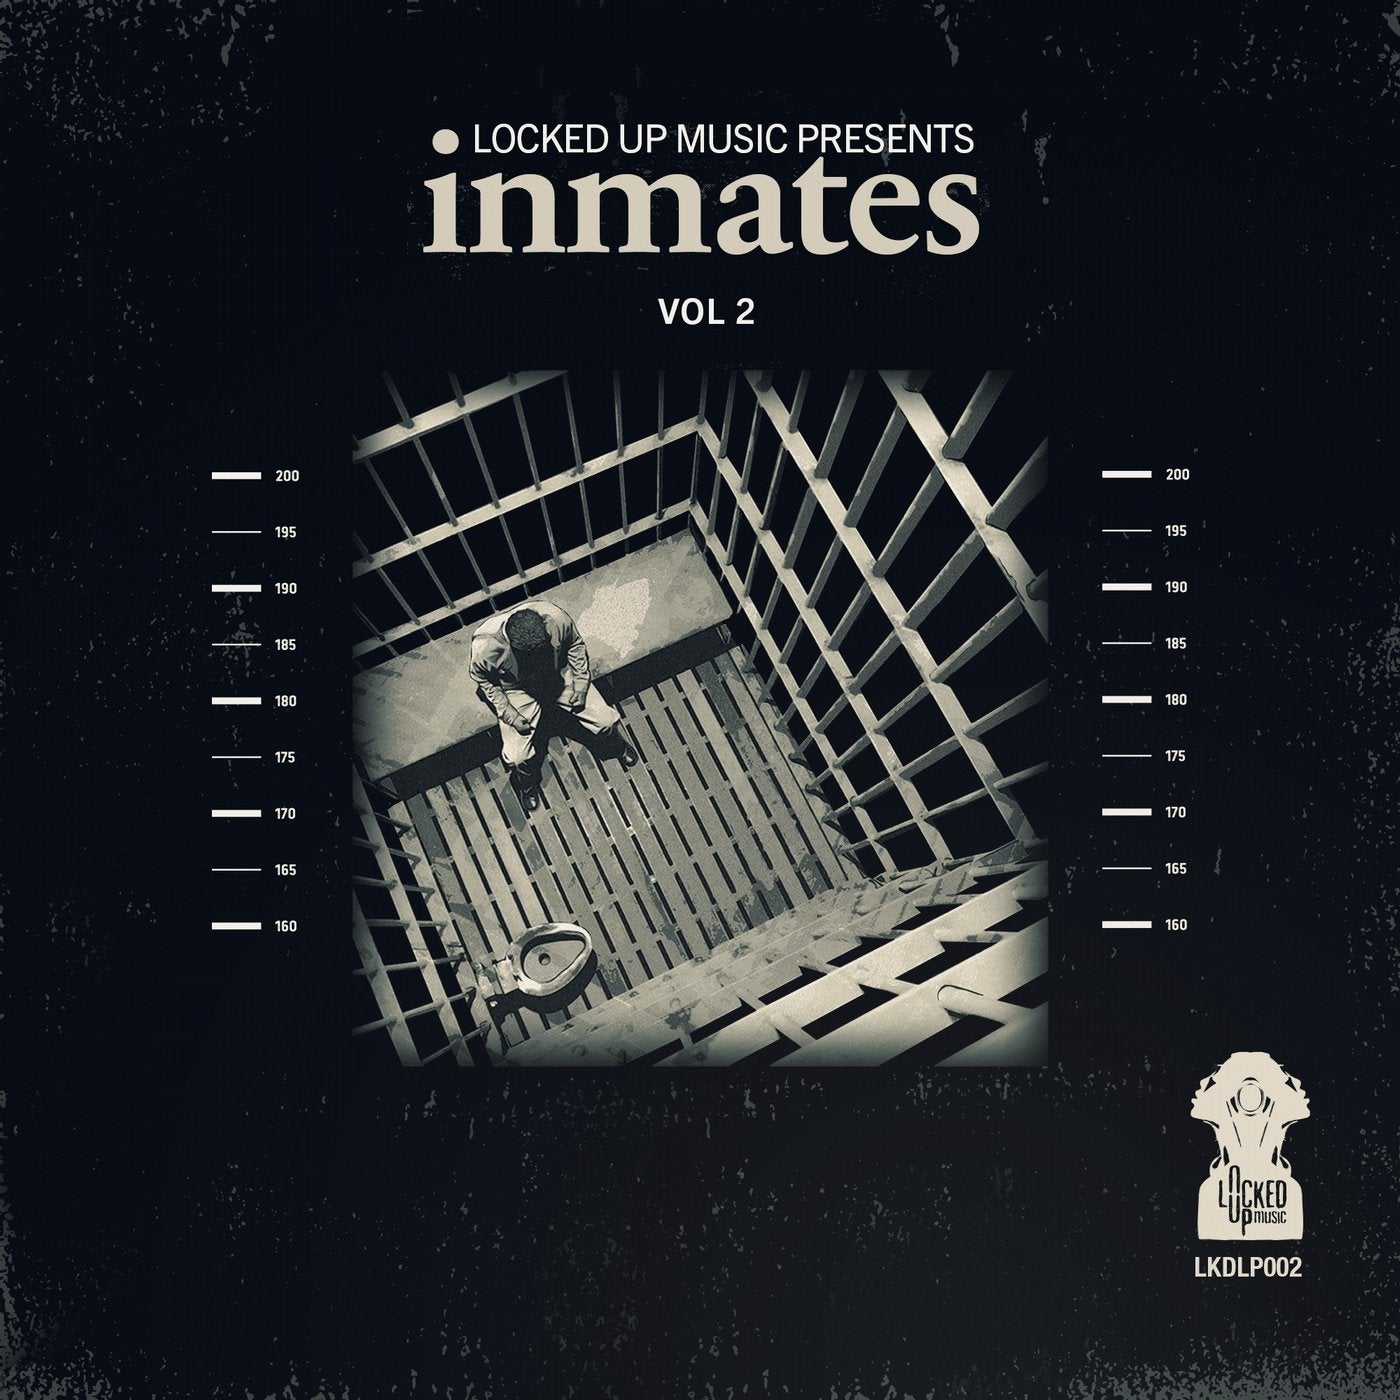 Inmates Vol. 2